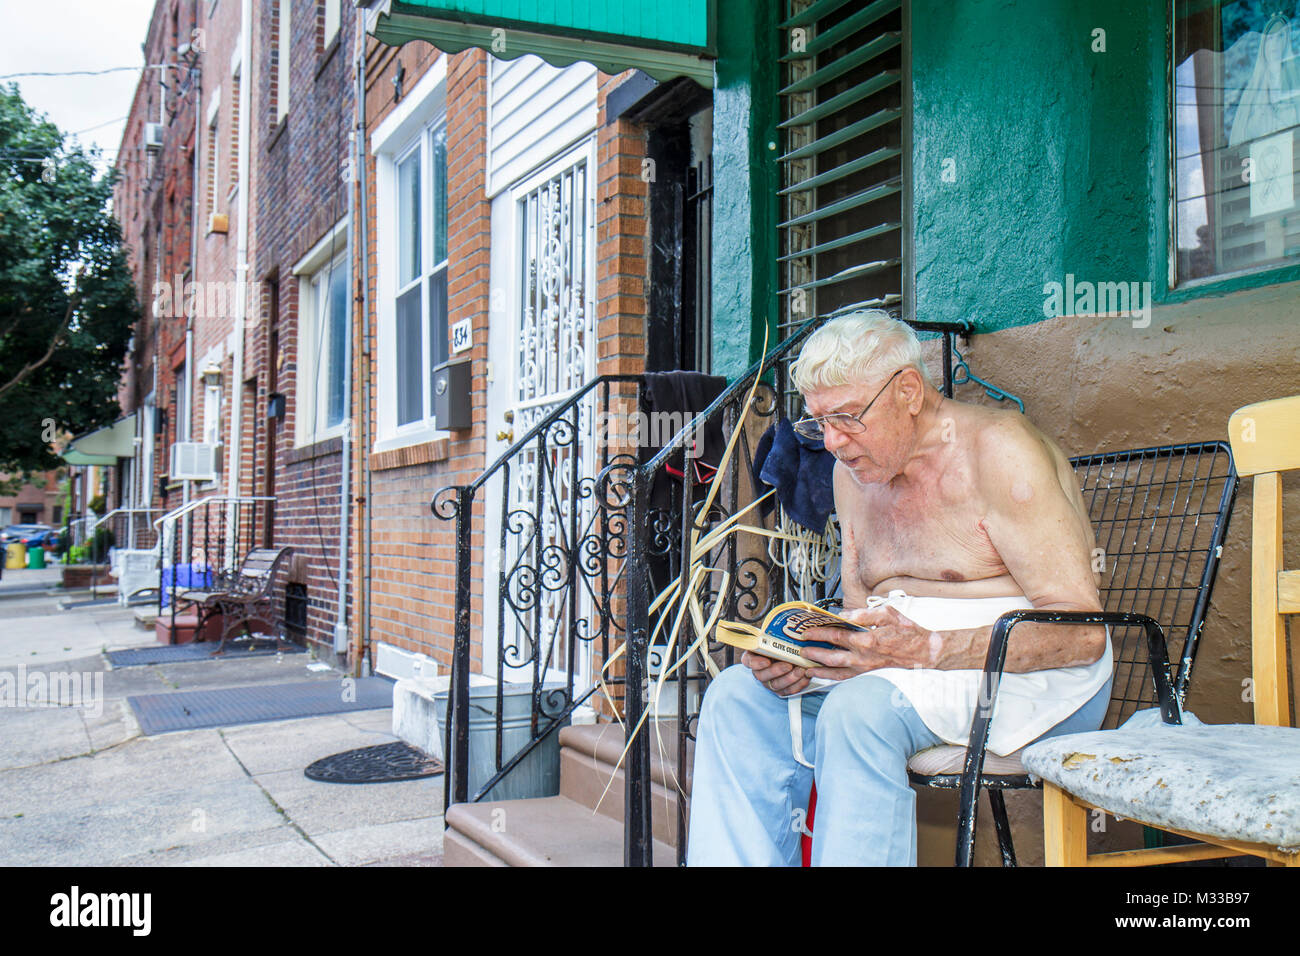 Philadelphia Pennsylvania,South Philly,street,sidewalk,man men male,senior seniors citizen citizens,barechest,sitting,reading,white hair,outdoor,row h Stock Photo